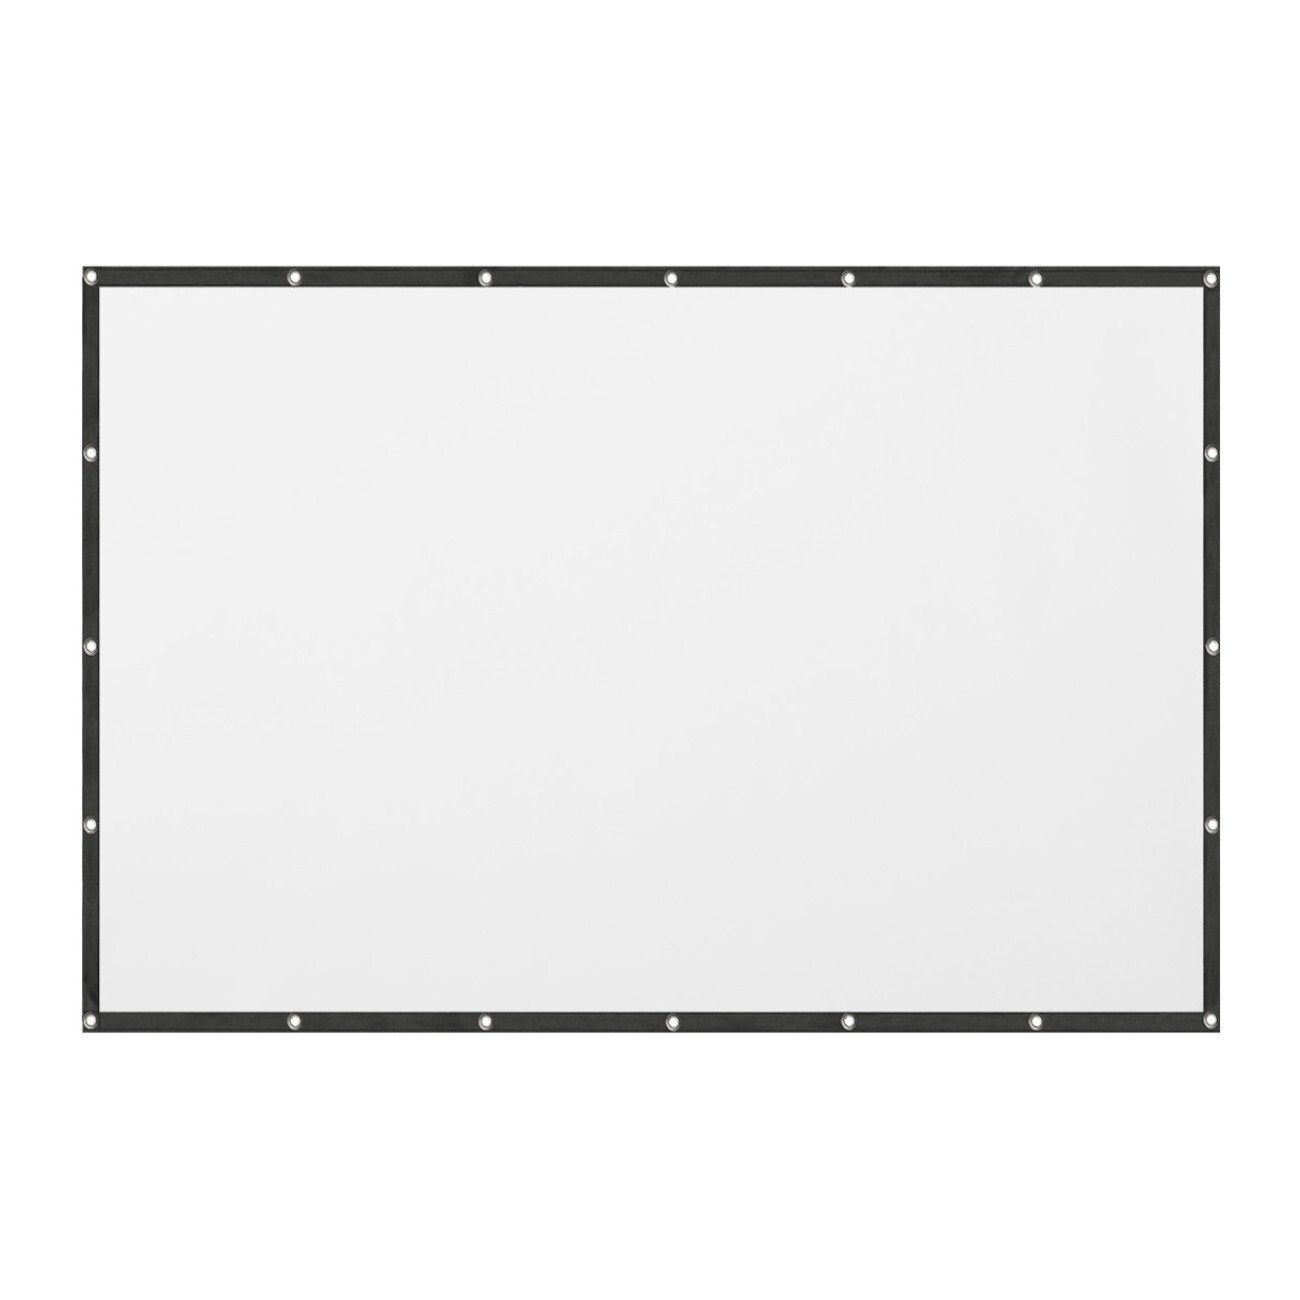 LA VAGUE LV-STA100FP PRO screen 16/9 100 zoll weiß/schwarz Faltrahmenleinwand (Leinwand für Frontprojektion, 16:9 100 Zoll)